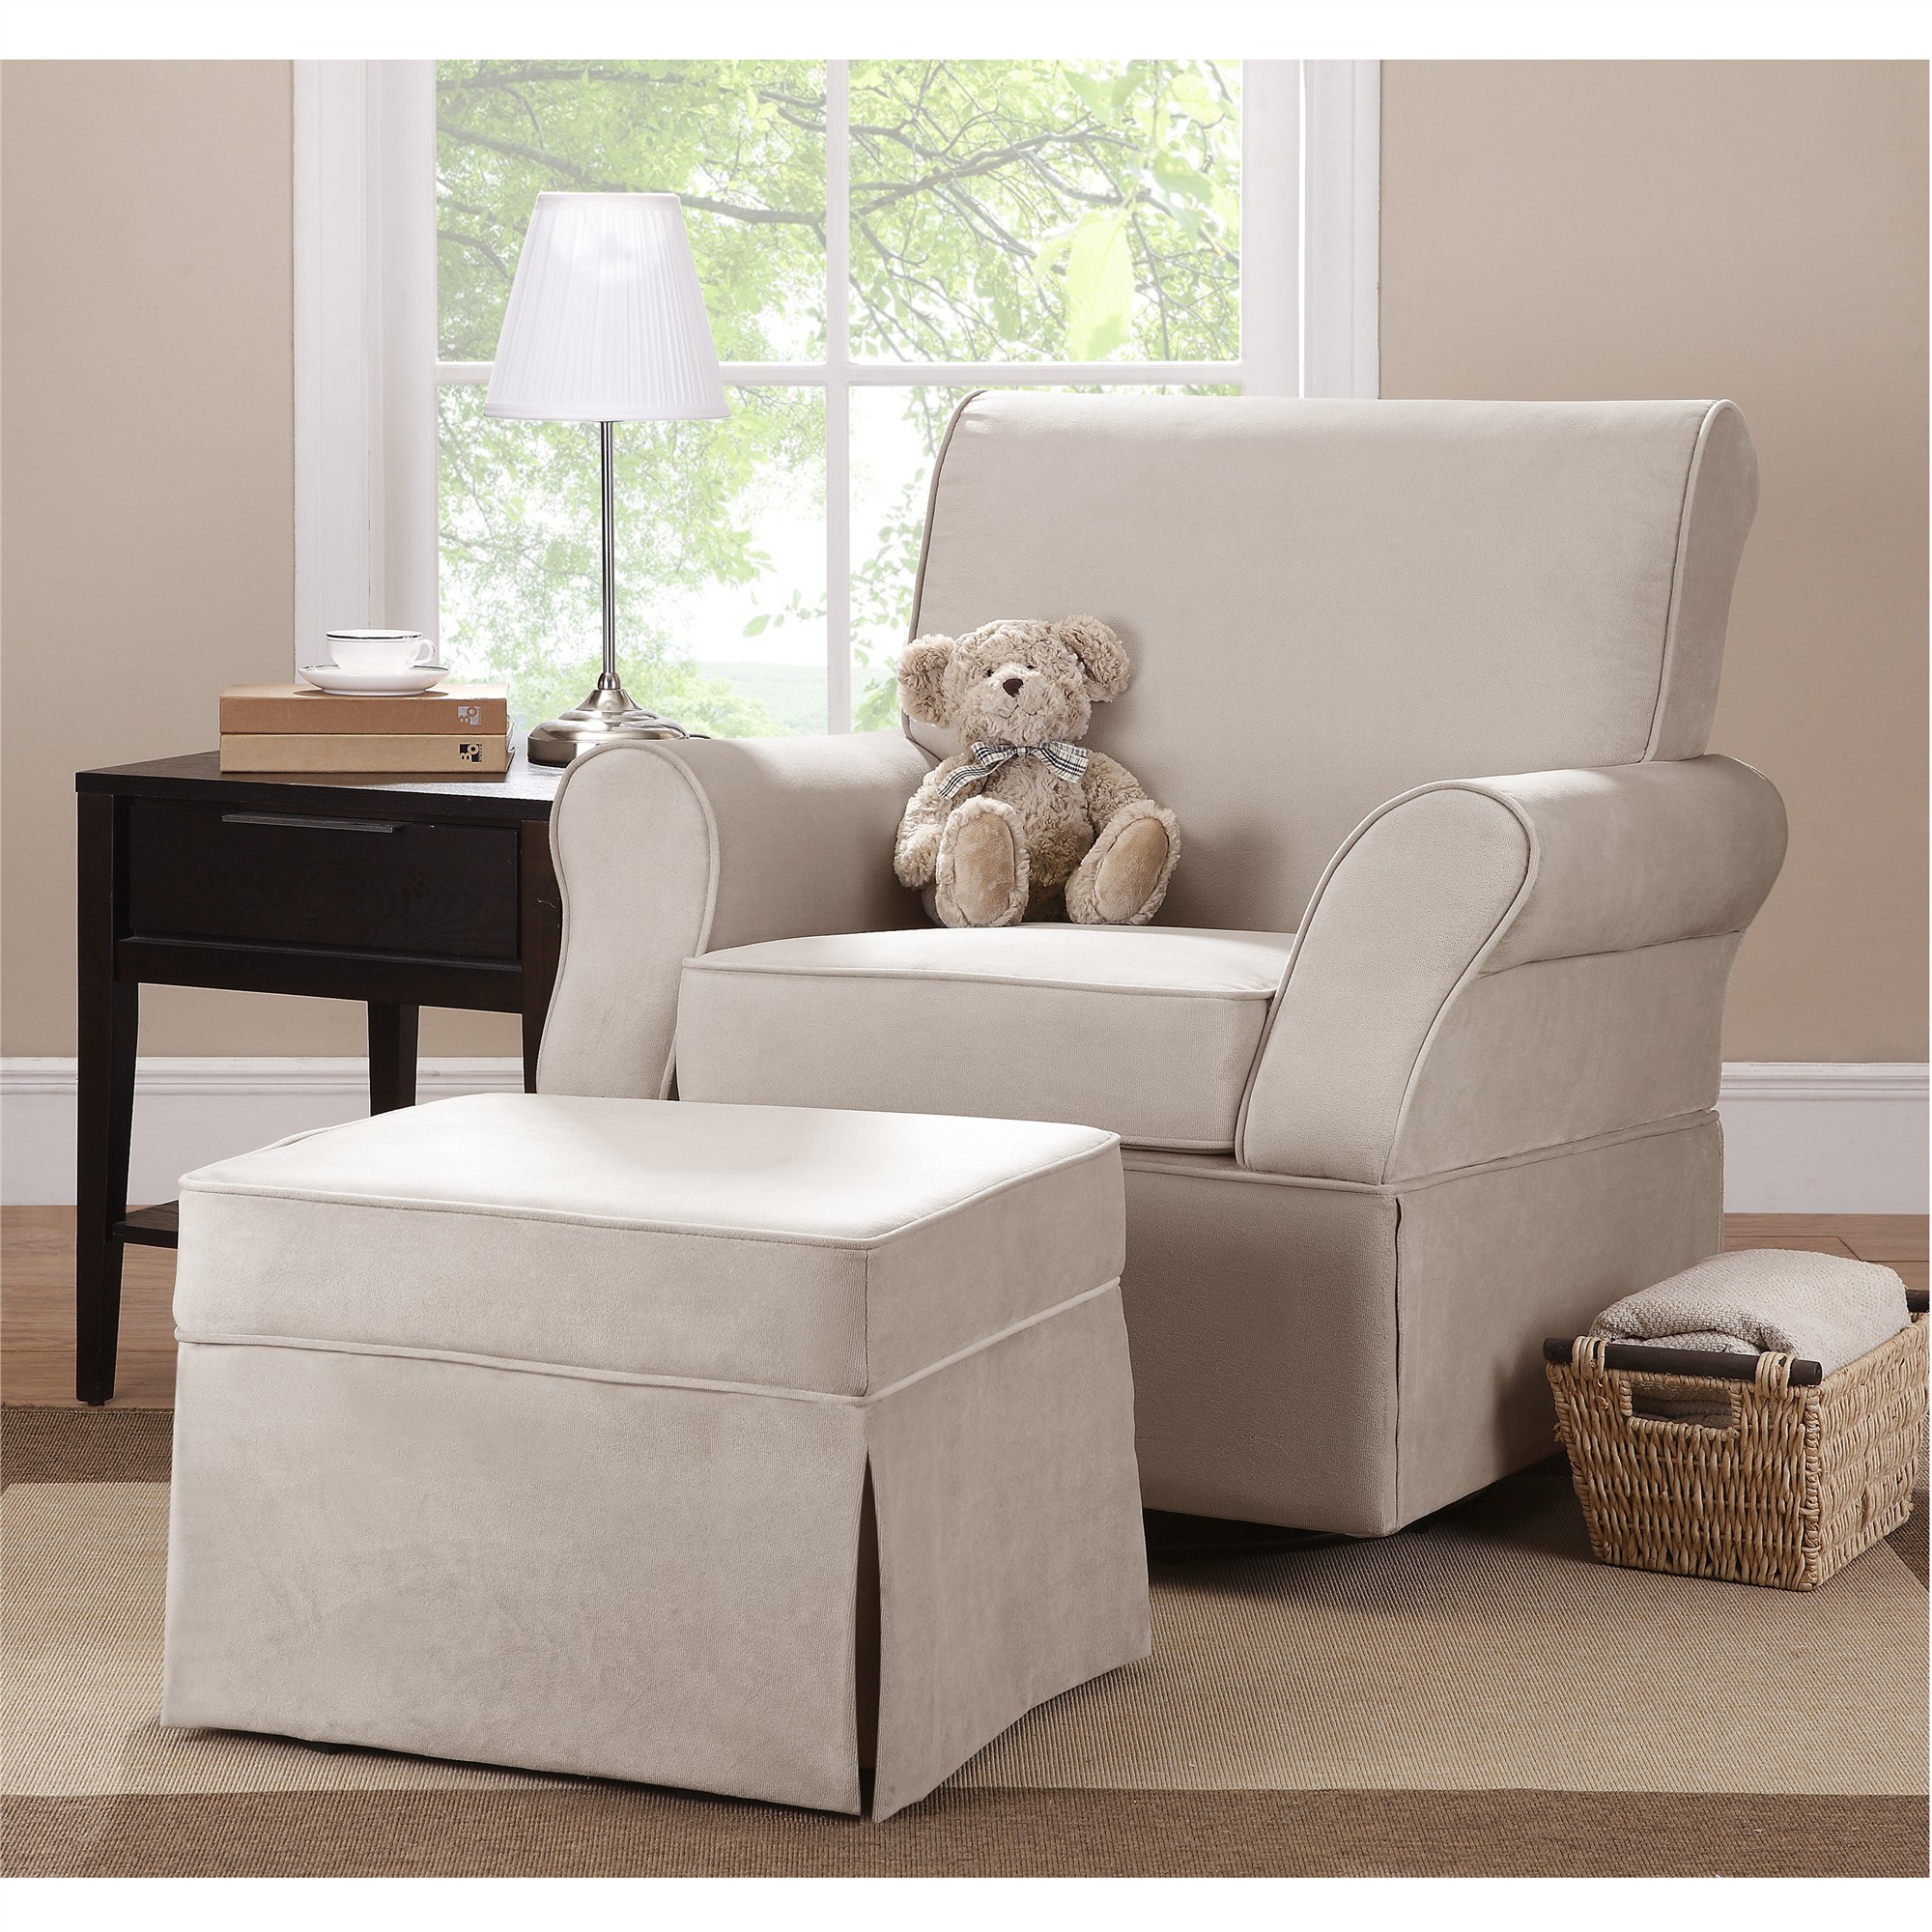 Baby Relax Kelcie Swivel Glider Chair & Ottoman Nursery Set, Beige Microfiber - image 2 of 15